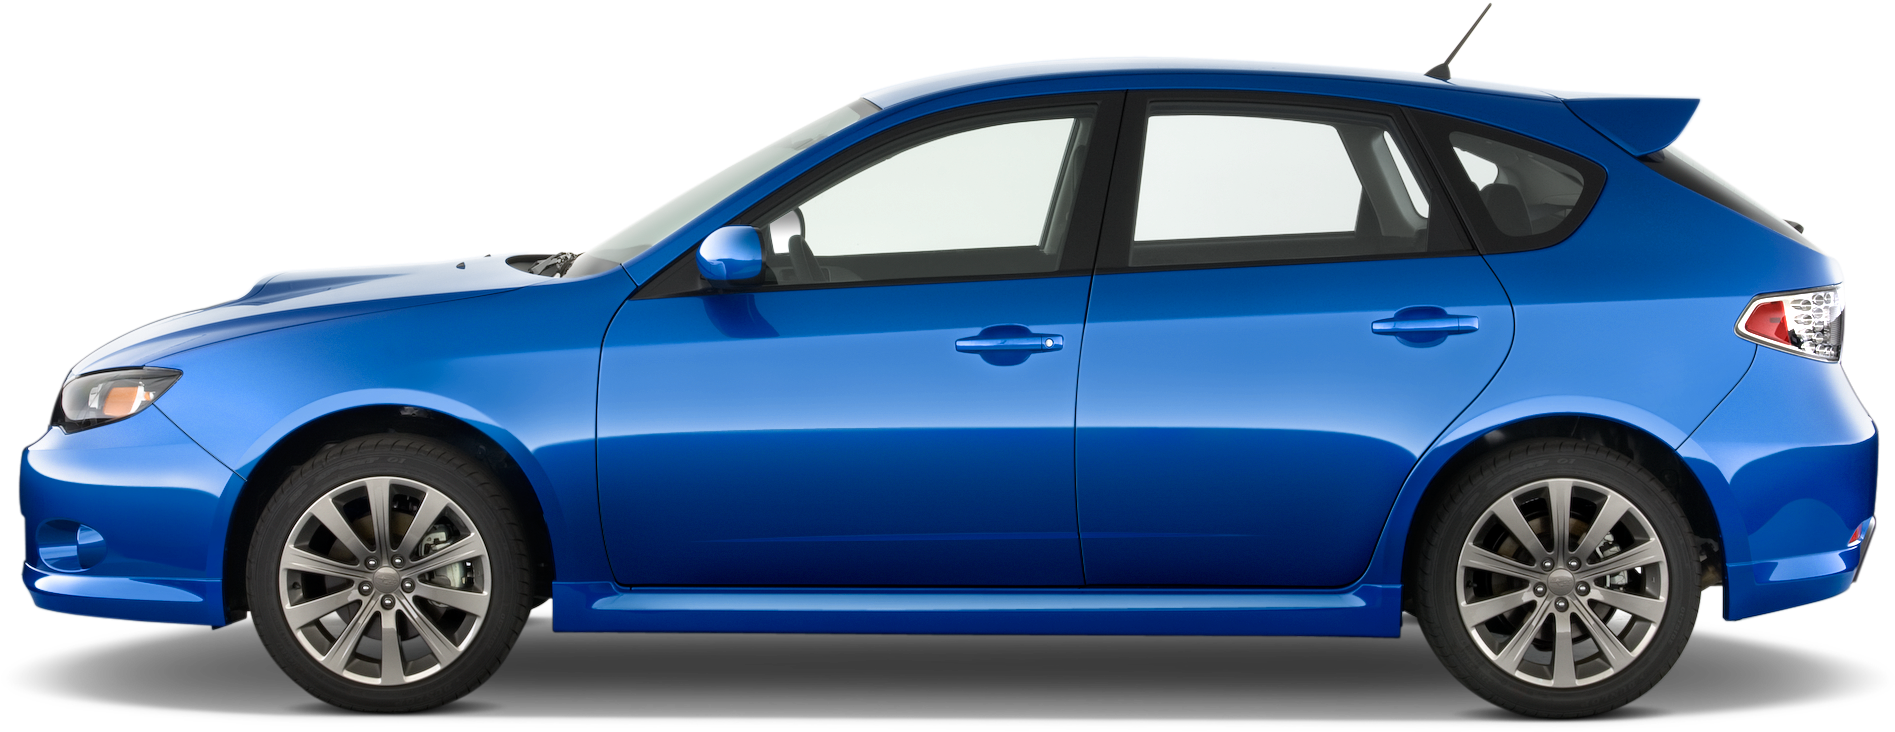 Subaru Impreza PNG Images HD